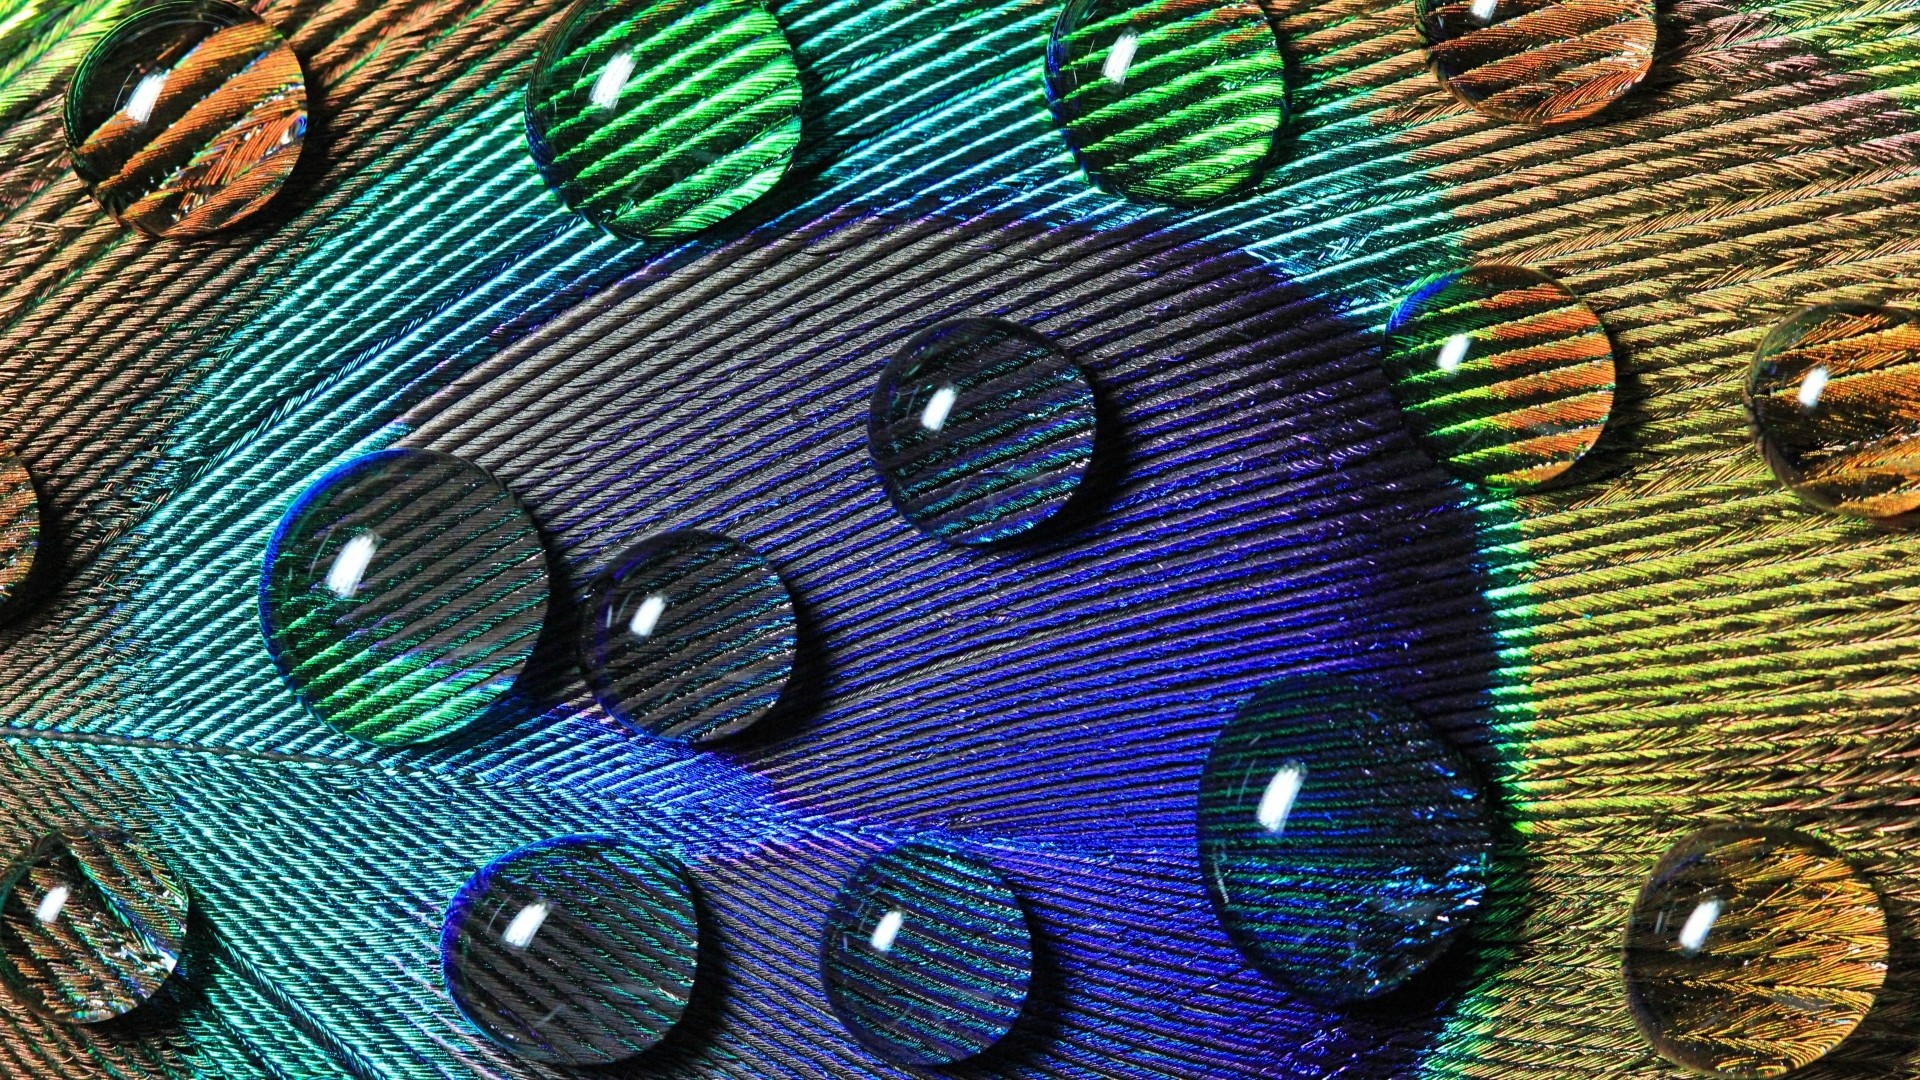 General 1920x1080 peacocks feathers water drops closeup macro colorful nature